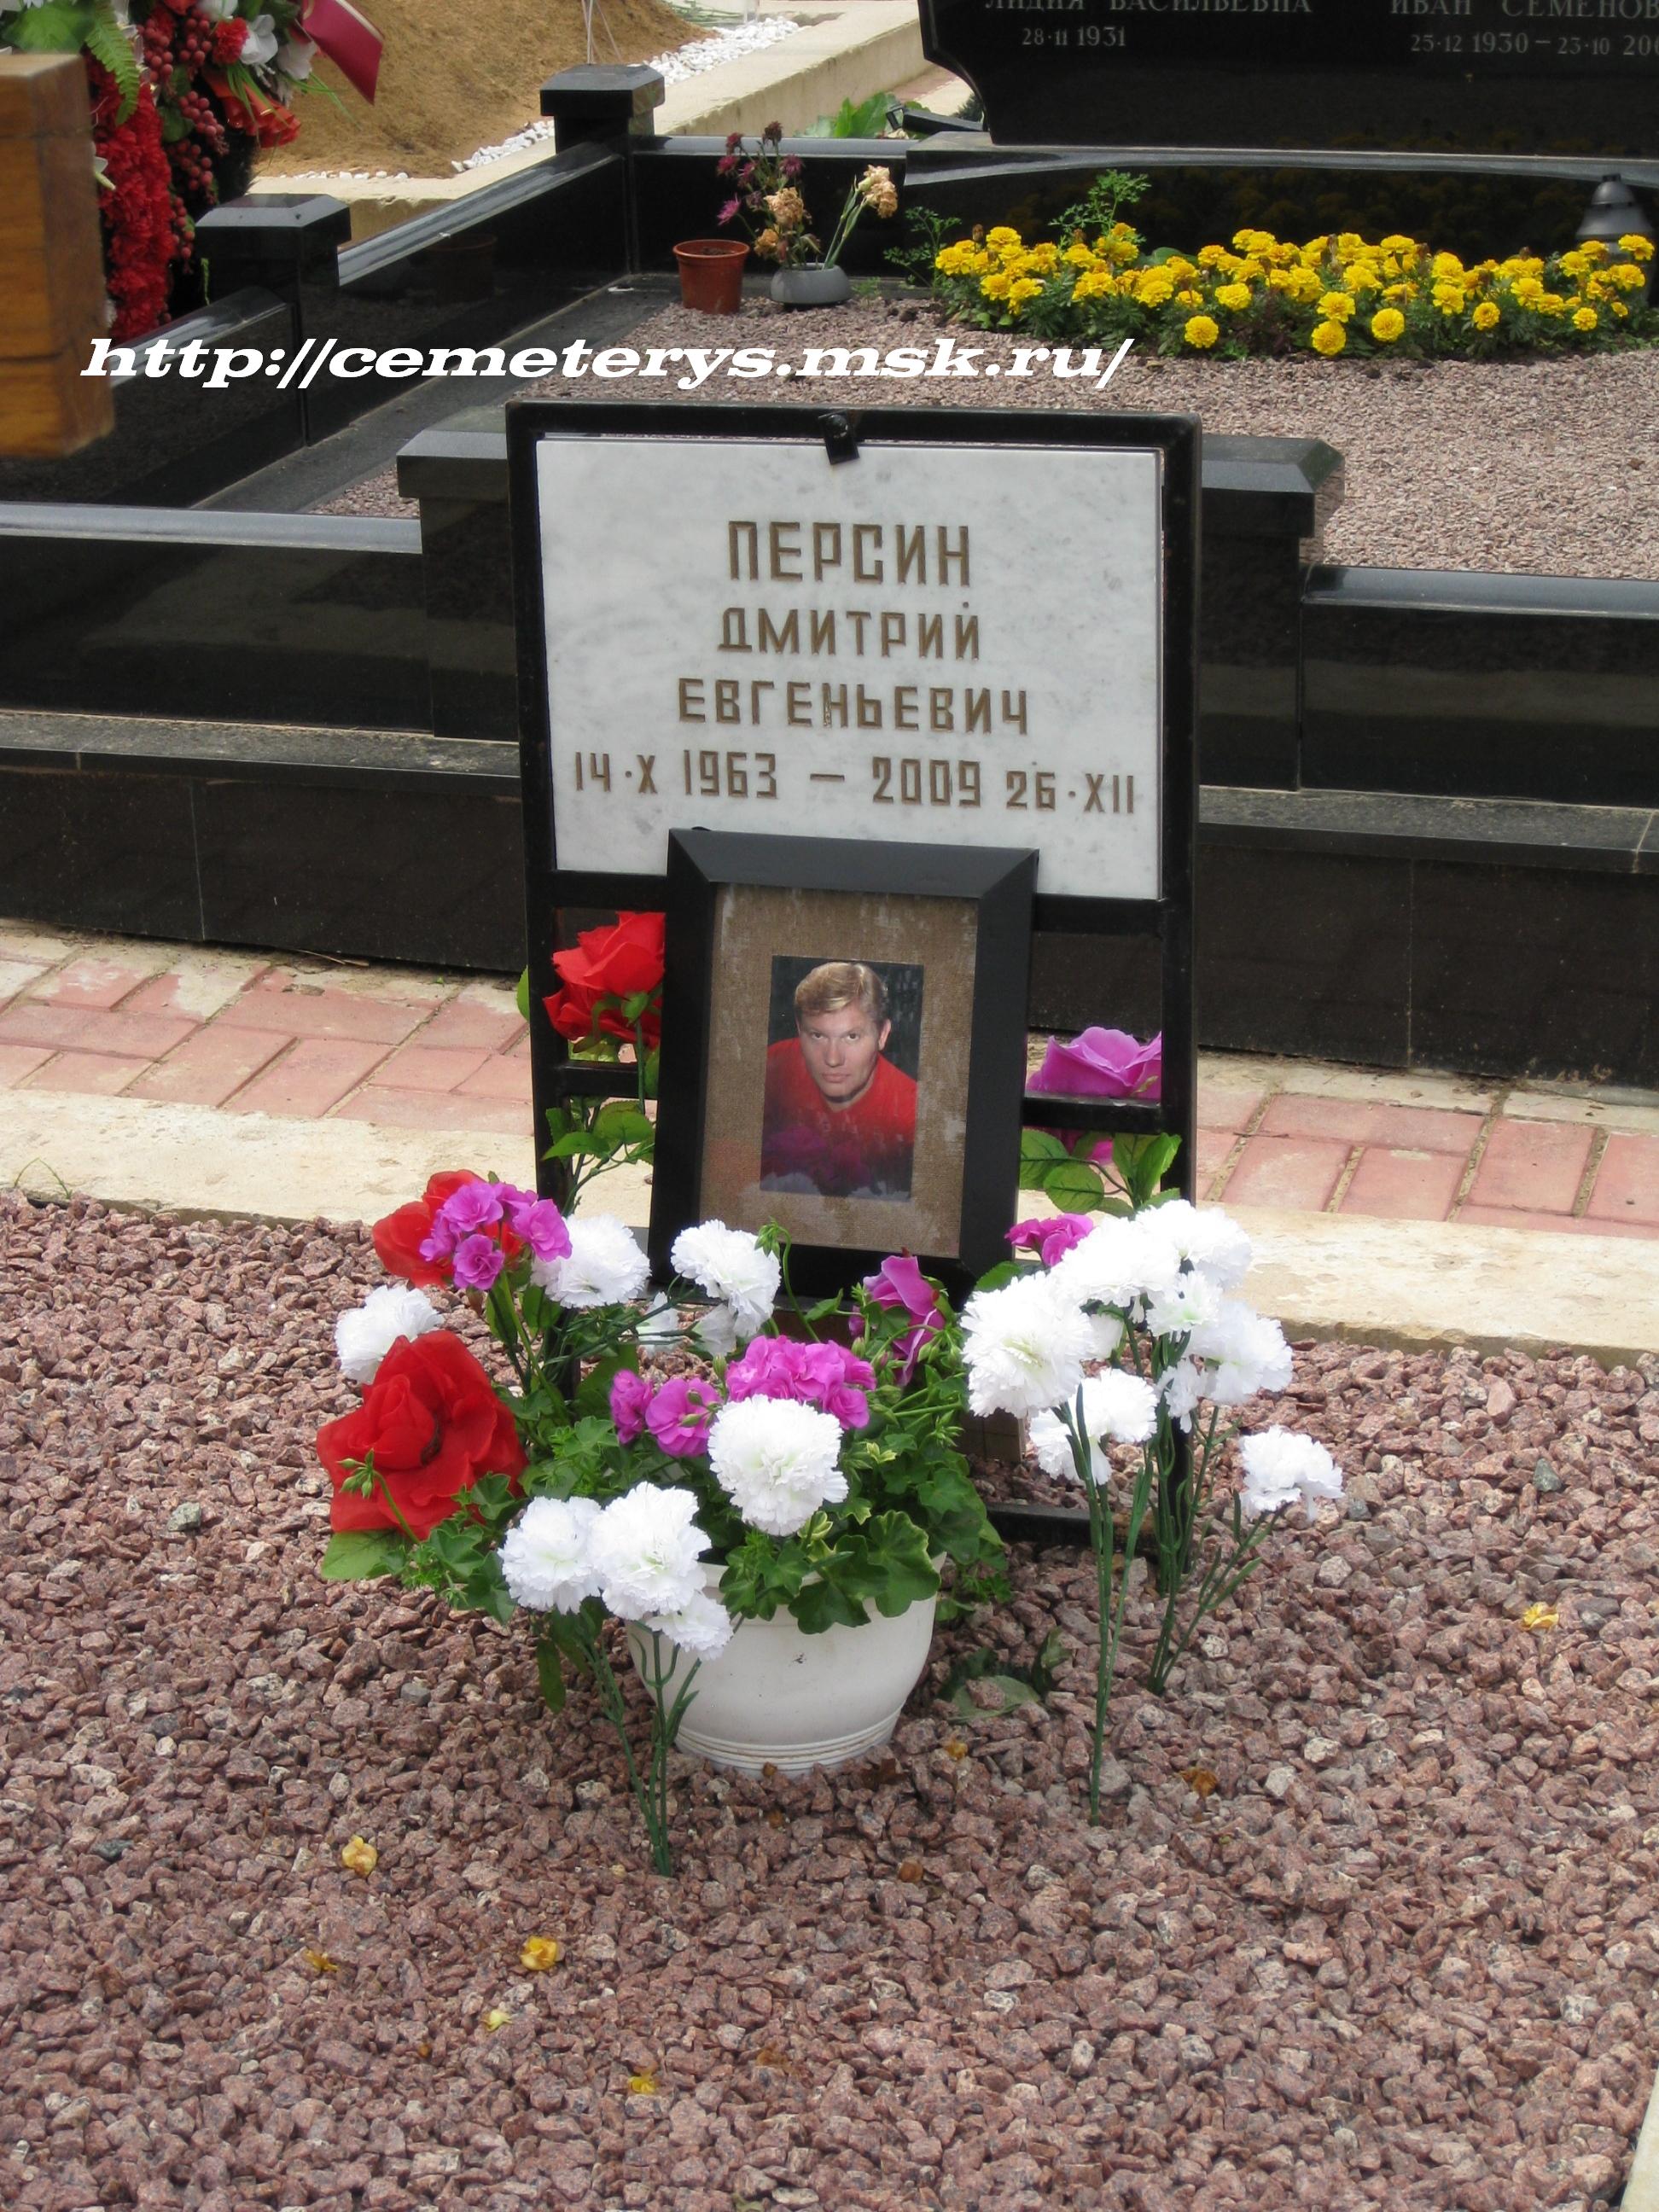 могила  актера Дмитрия Персина ( фото Дмитрия Кондратьева )